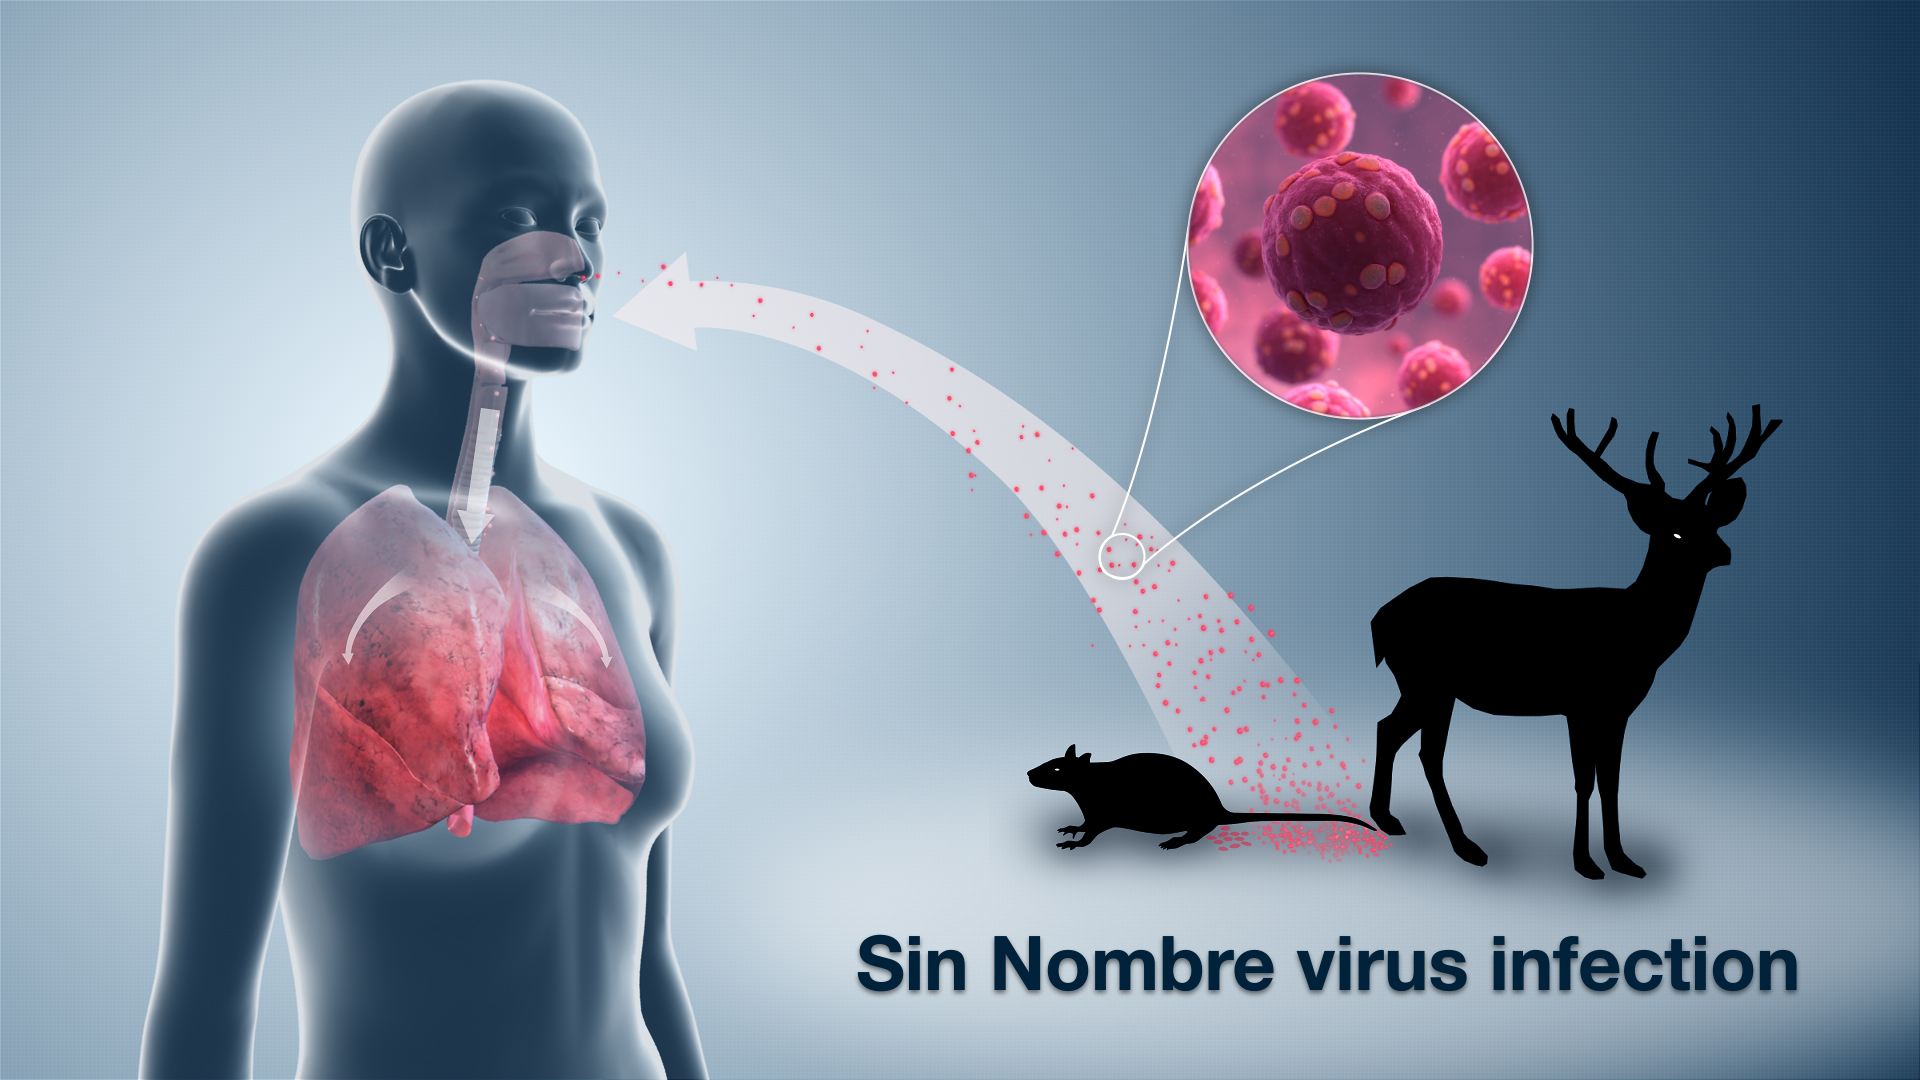 Medical Animation Still Shot Showing, transmission of Sin Nombre Virus From Rat